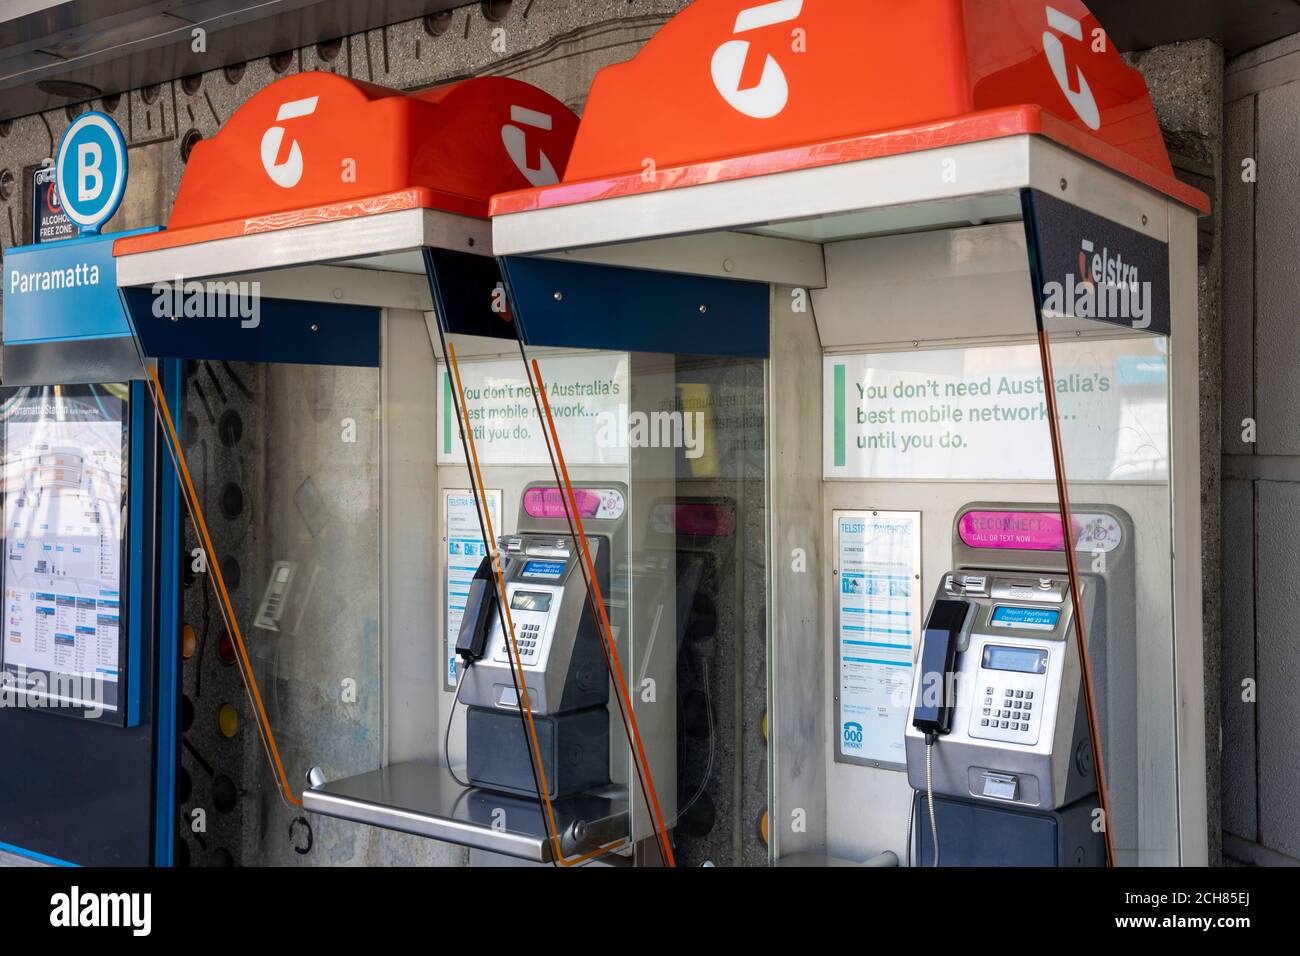 Telstra public payphone in Parramatta western Sydney, NSW,Australia Stock Photo